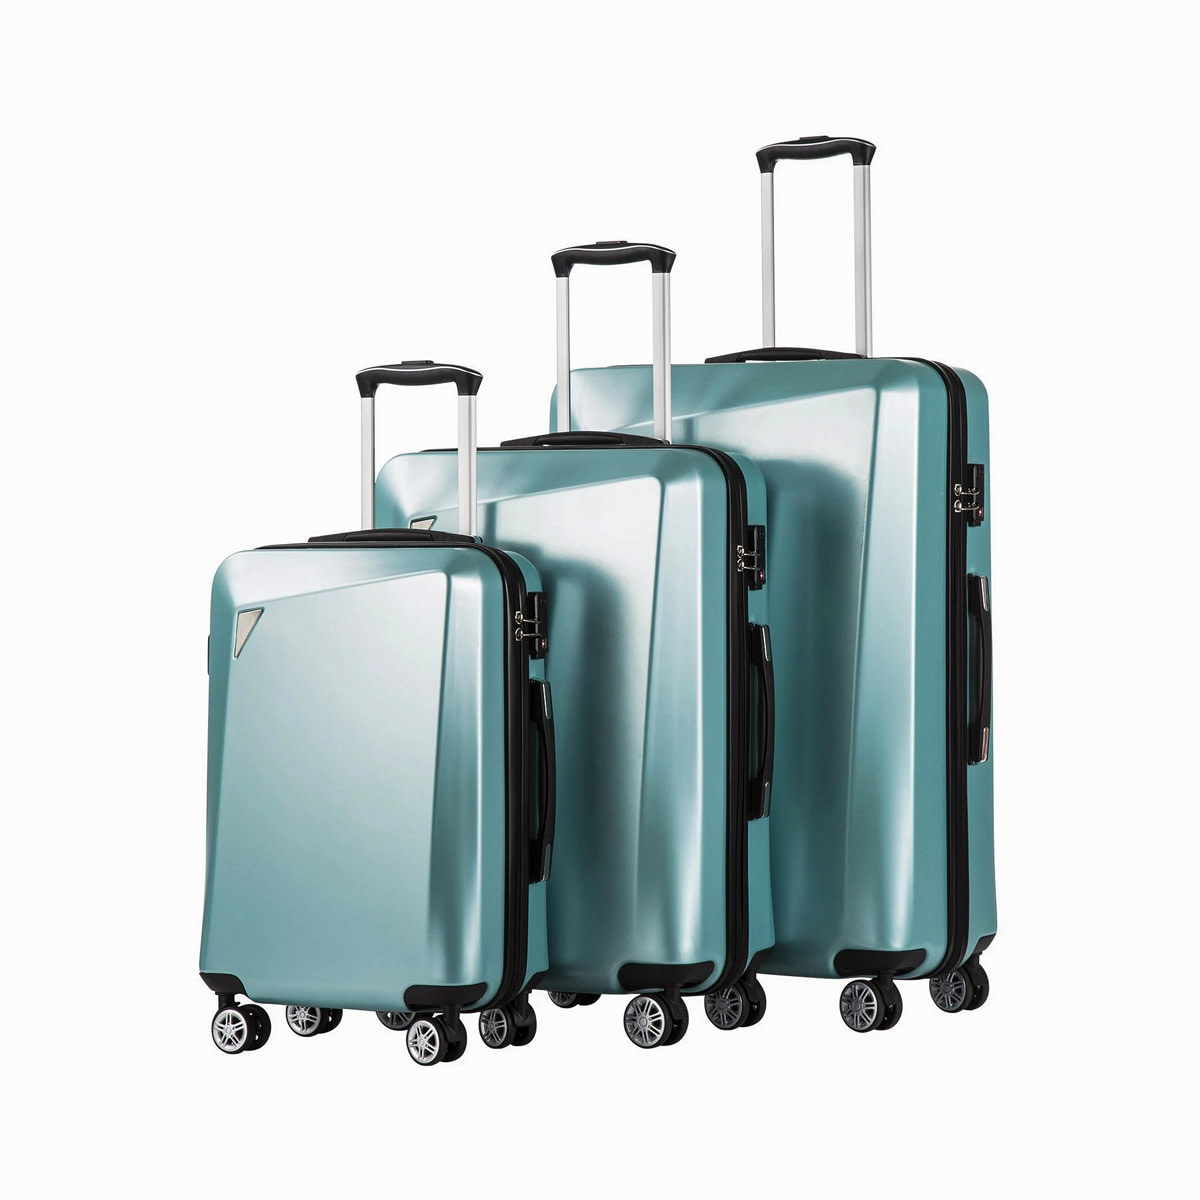 Best affordable luggage set